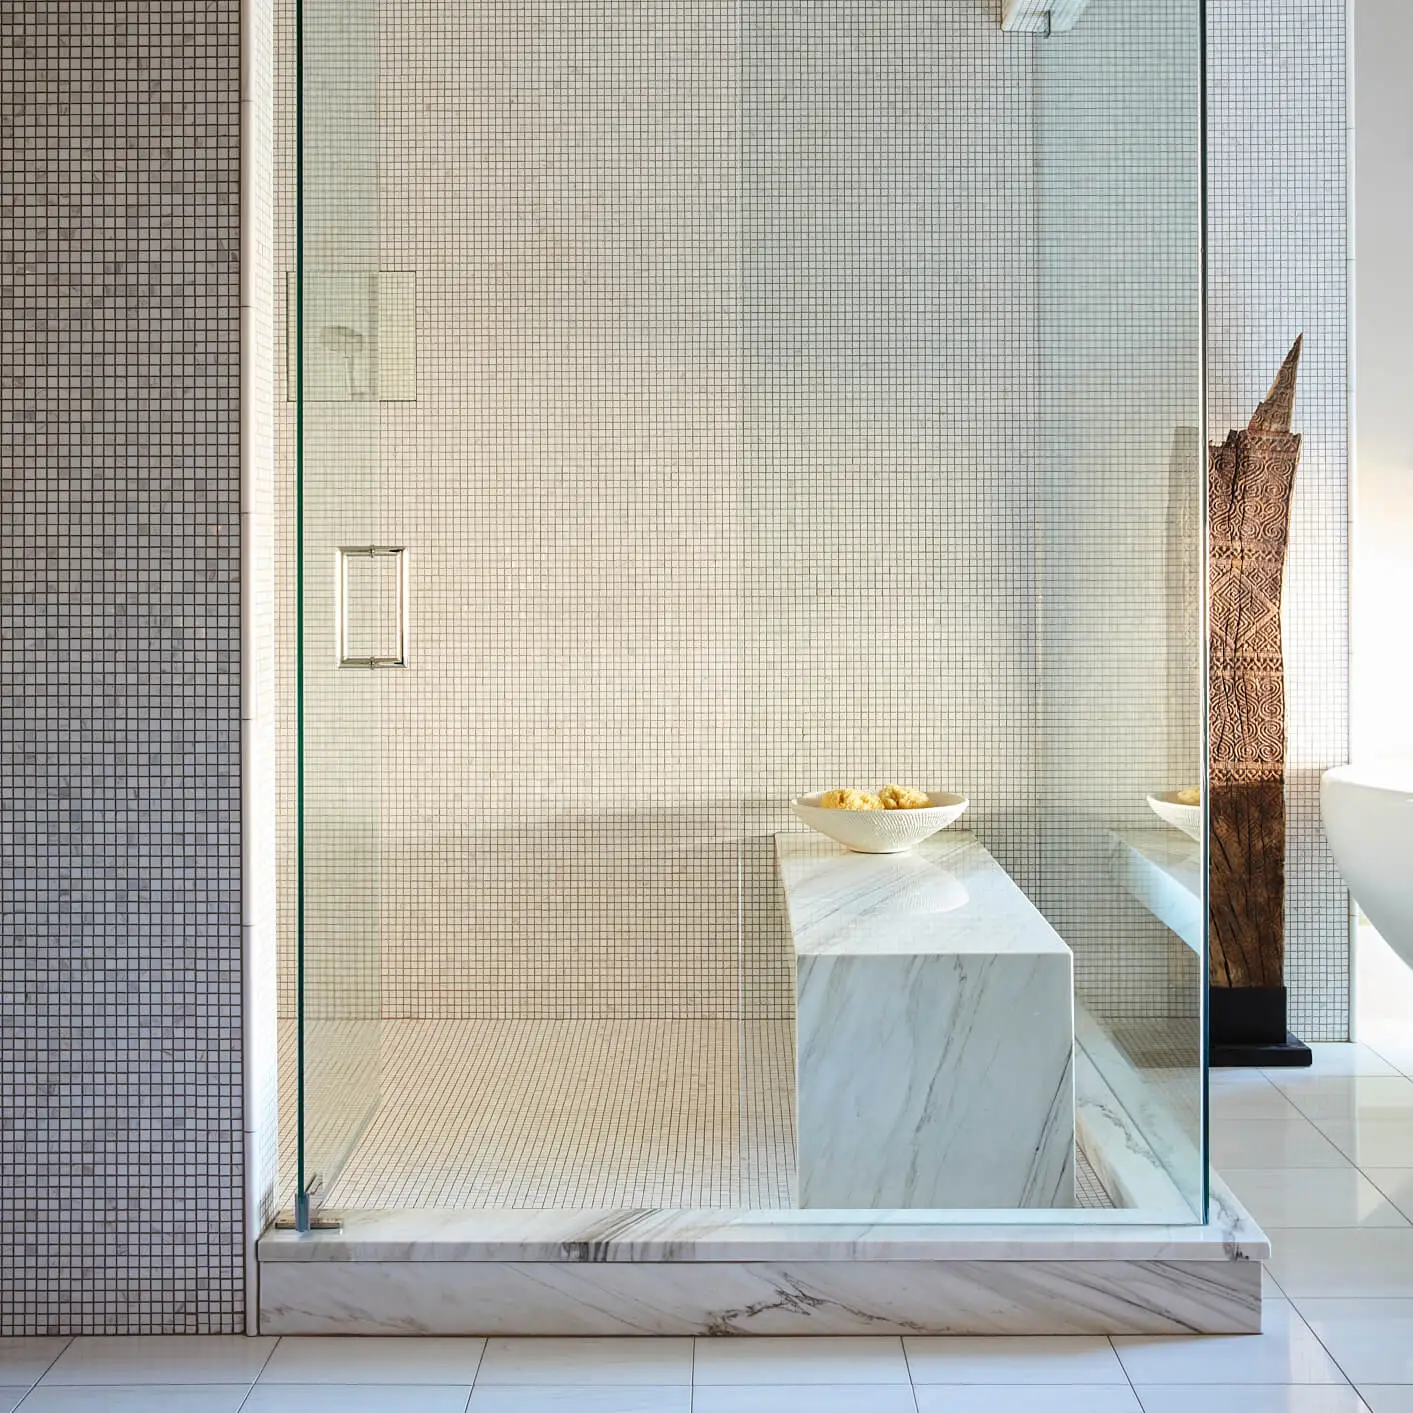 Denver interior designers primary suite marble shower by bathroom designers denver